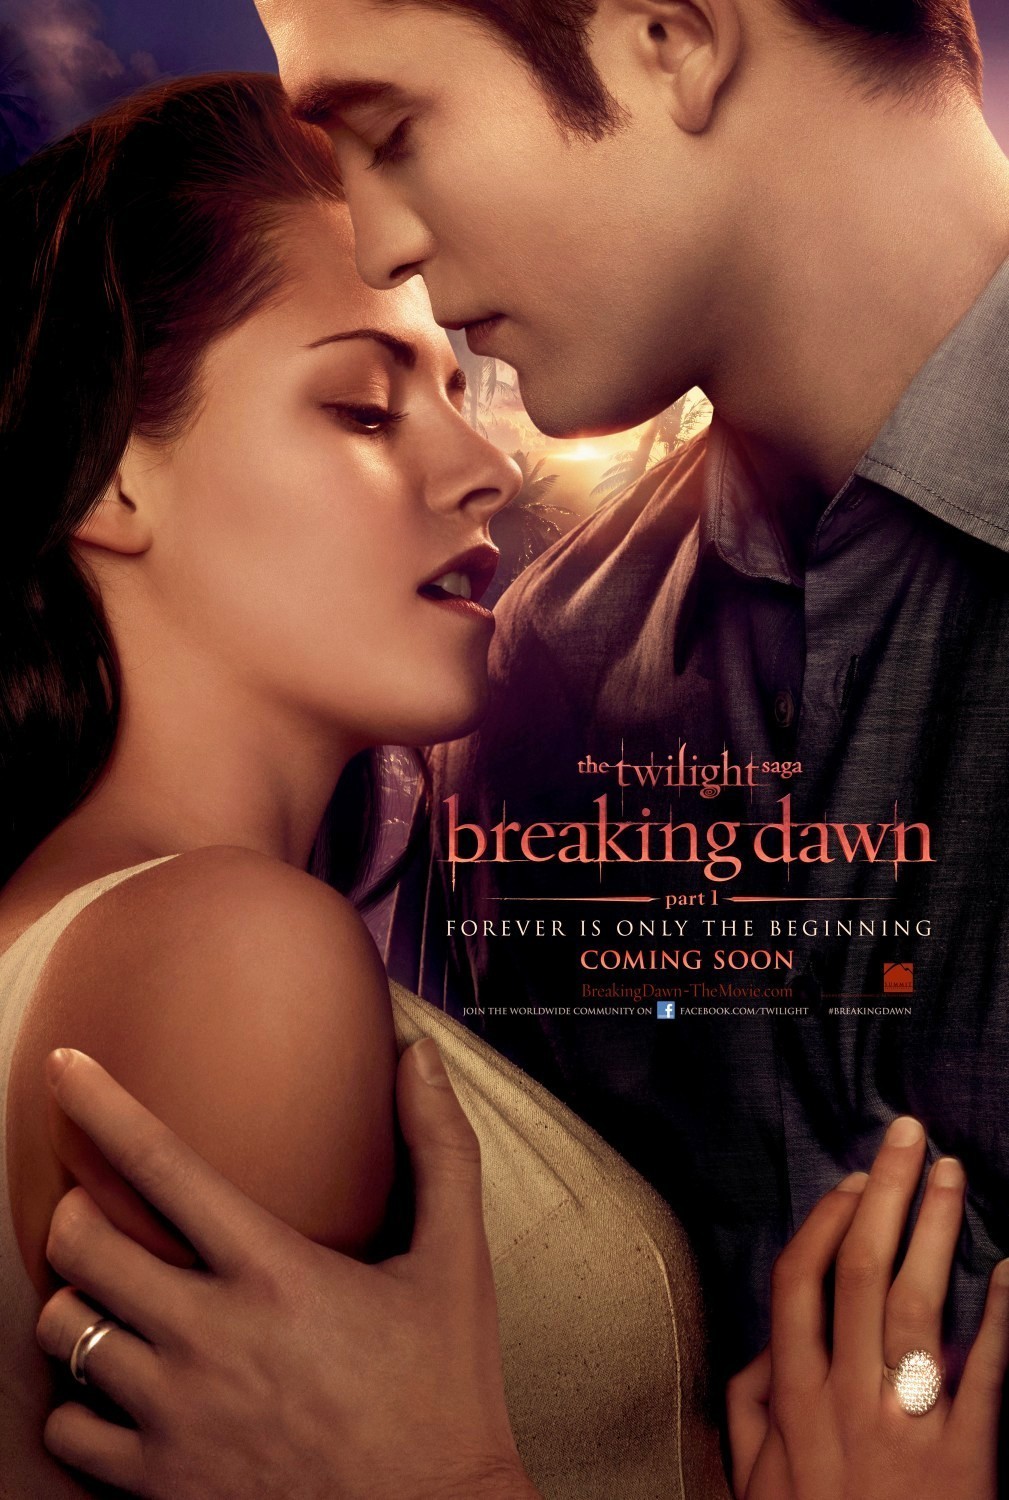 Poster of Summit Entertainment's The Twilight Saga's Breaking Dawn Part I (2011)